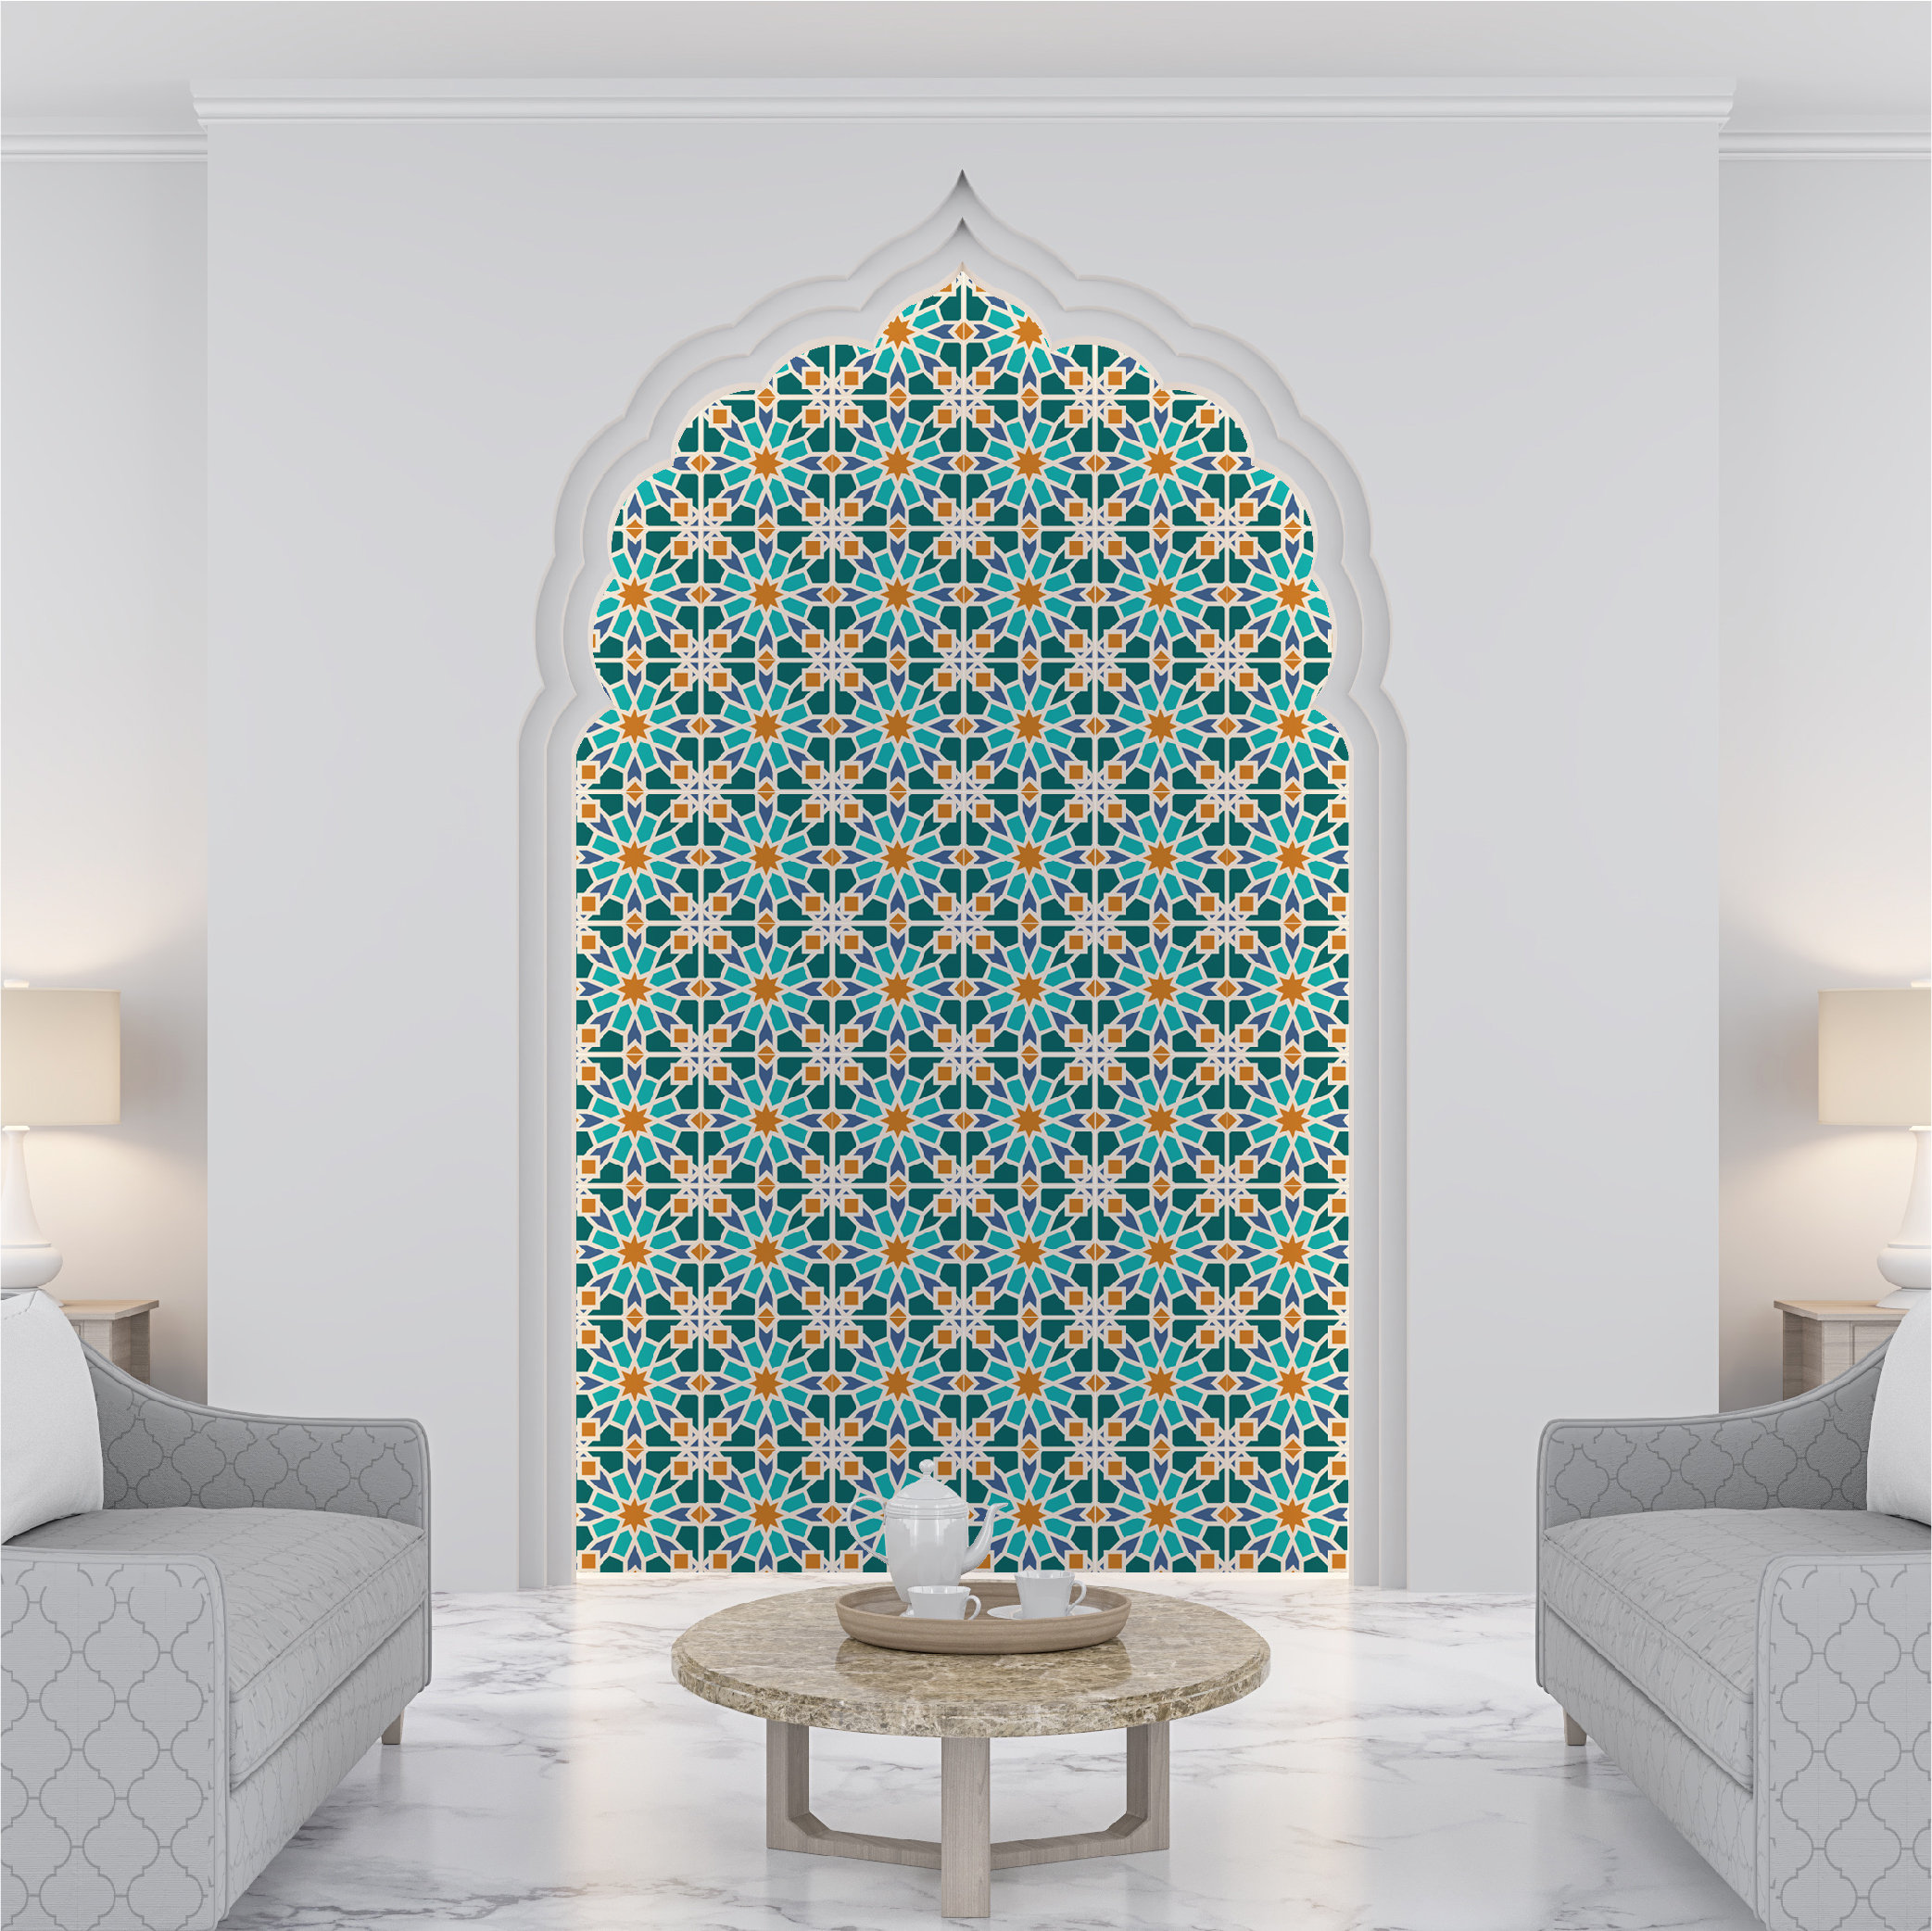 Style 50 MOSAICOWALL DIY Decorative Arabian Geometric Wall Tile Sticker 6 X 6 Inch For Kitchen